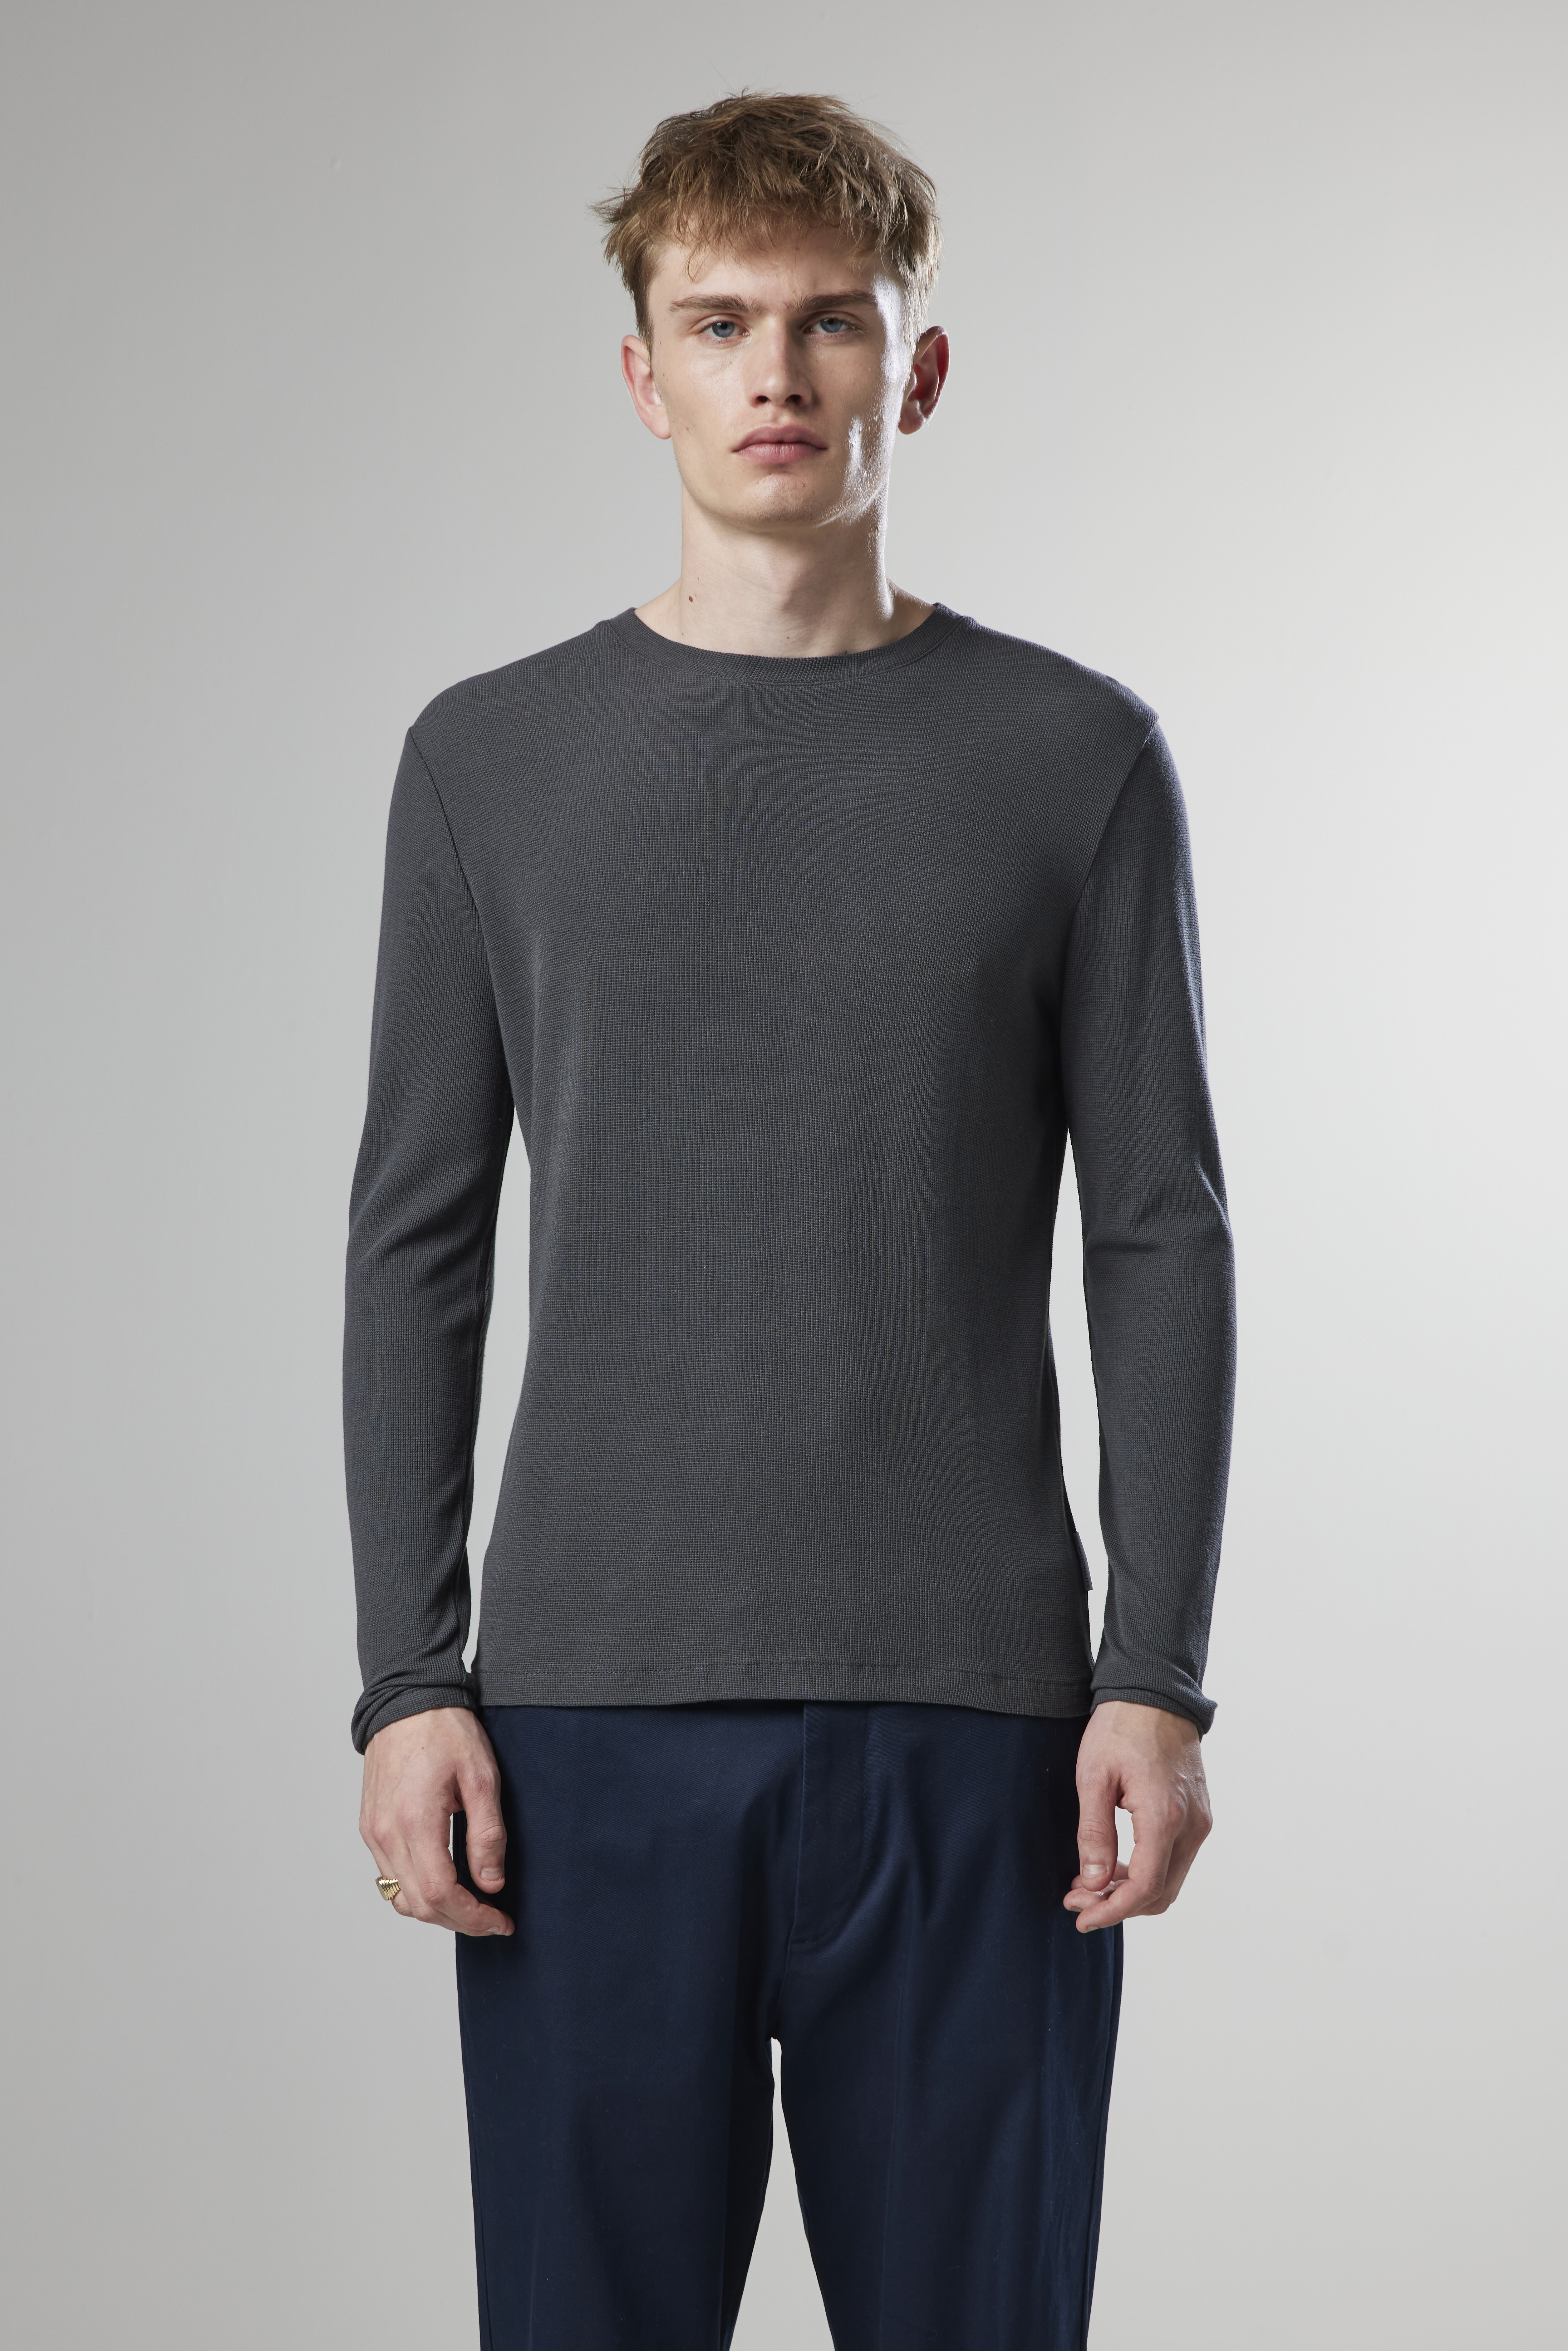 Clive 3323 men\'s t-shirt online Buy - - at Grey